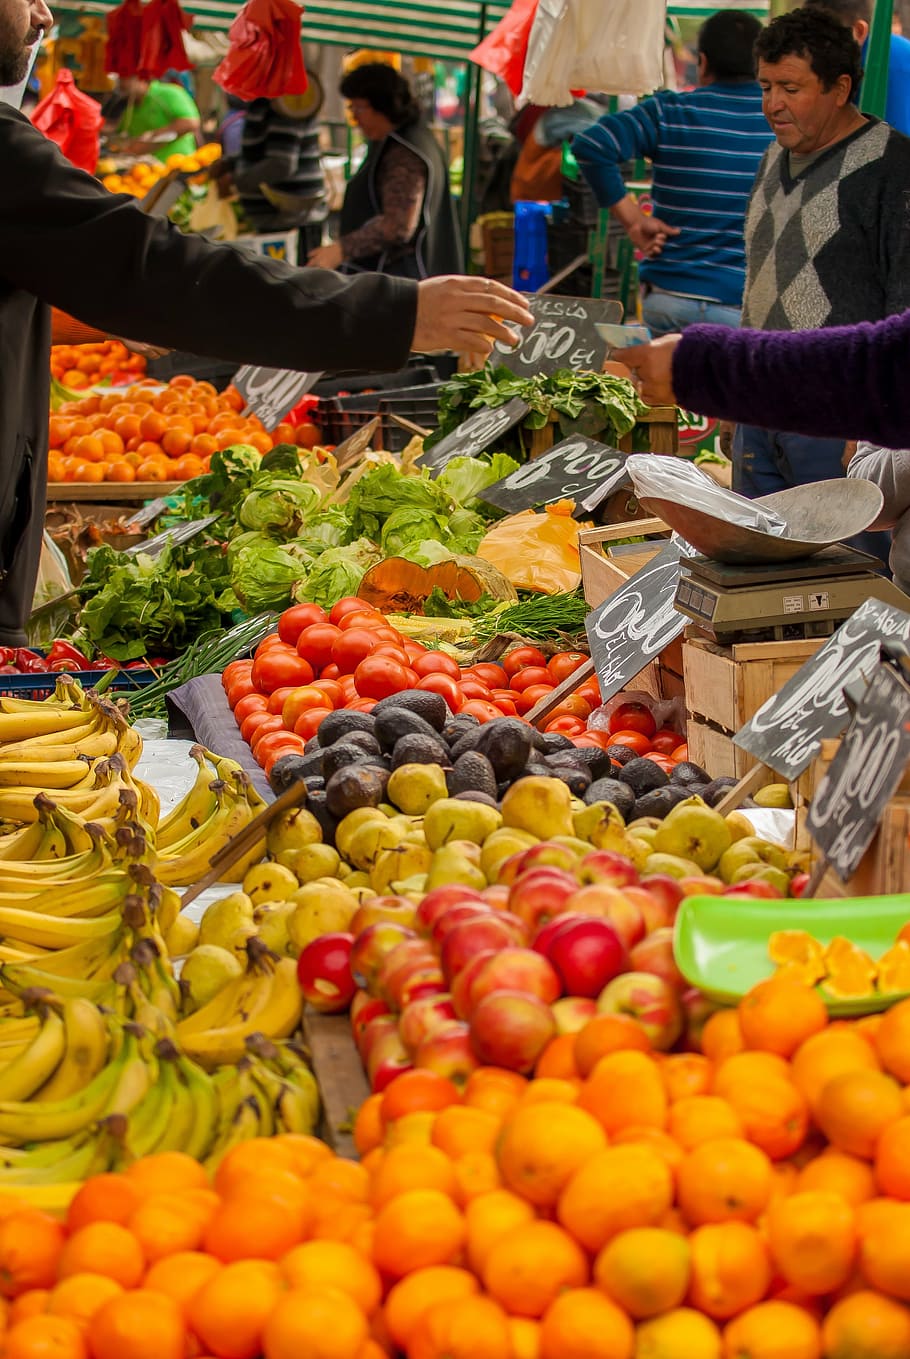 tomatoes, vegetables, fruit, vegetable, market, sale, power, banana, oranges, pears